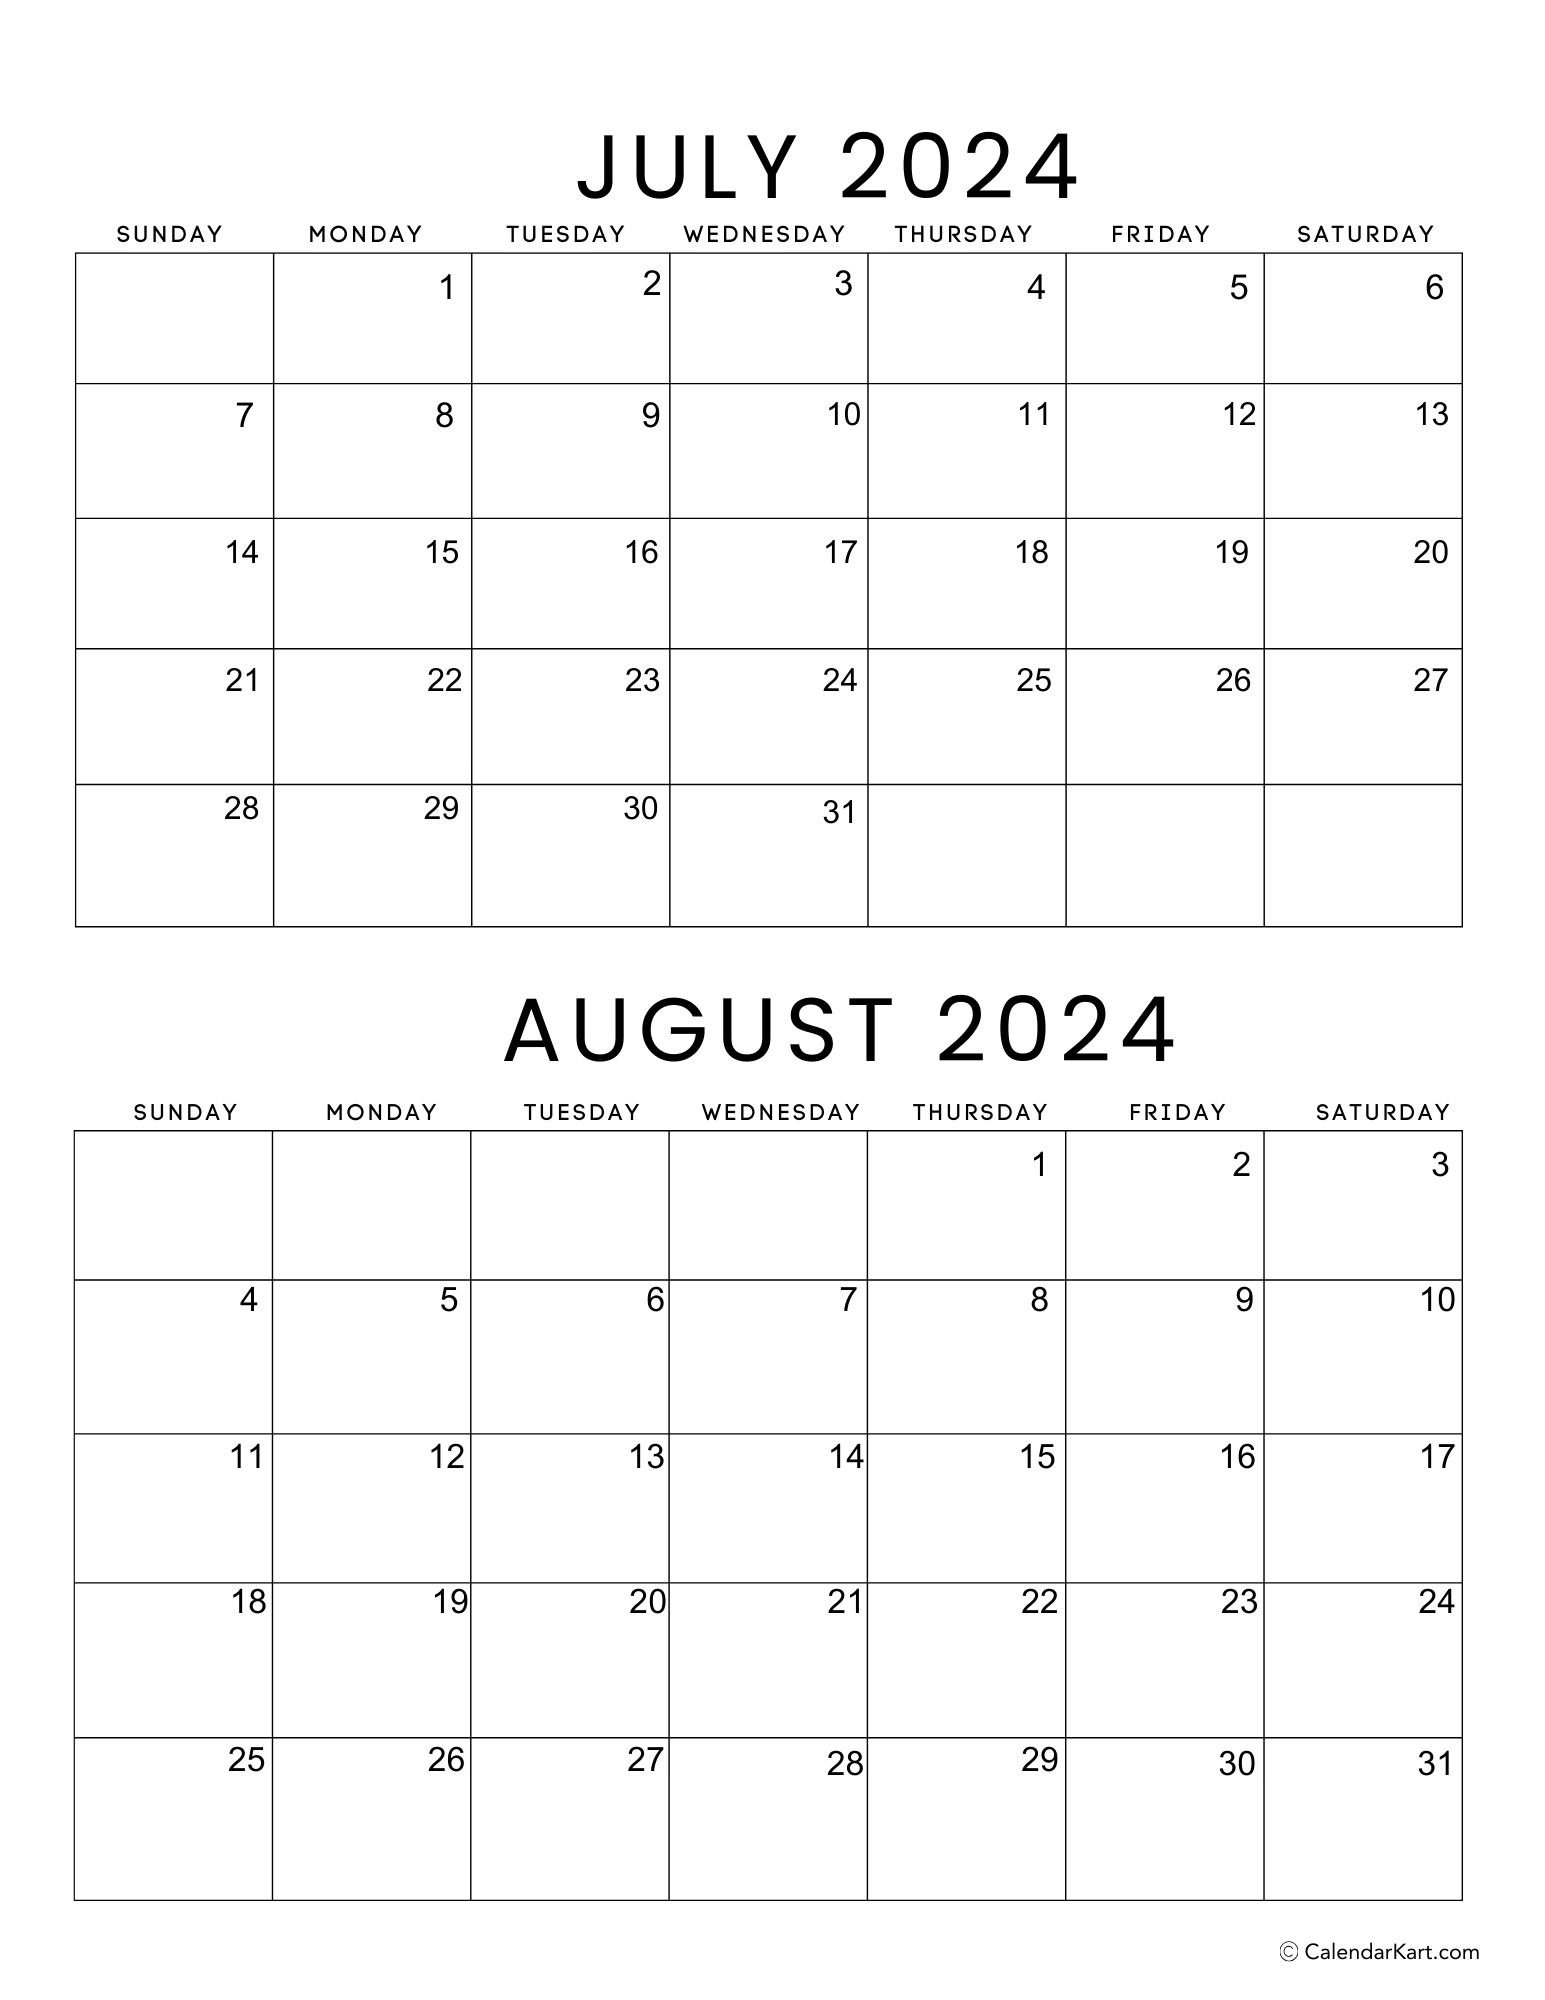 Printable July August 2024 Calendar | Calendarkart pertaining to Blank July August 2024 Calendar